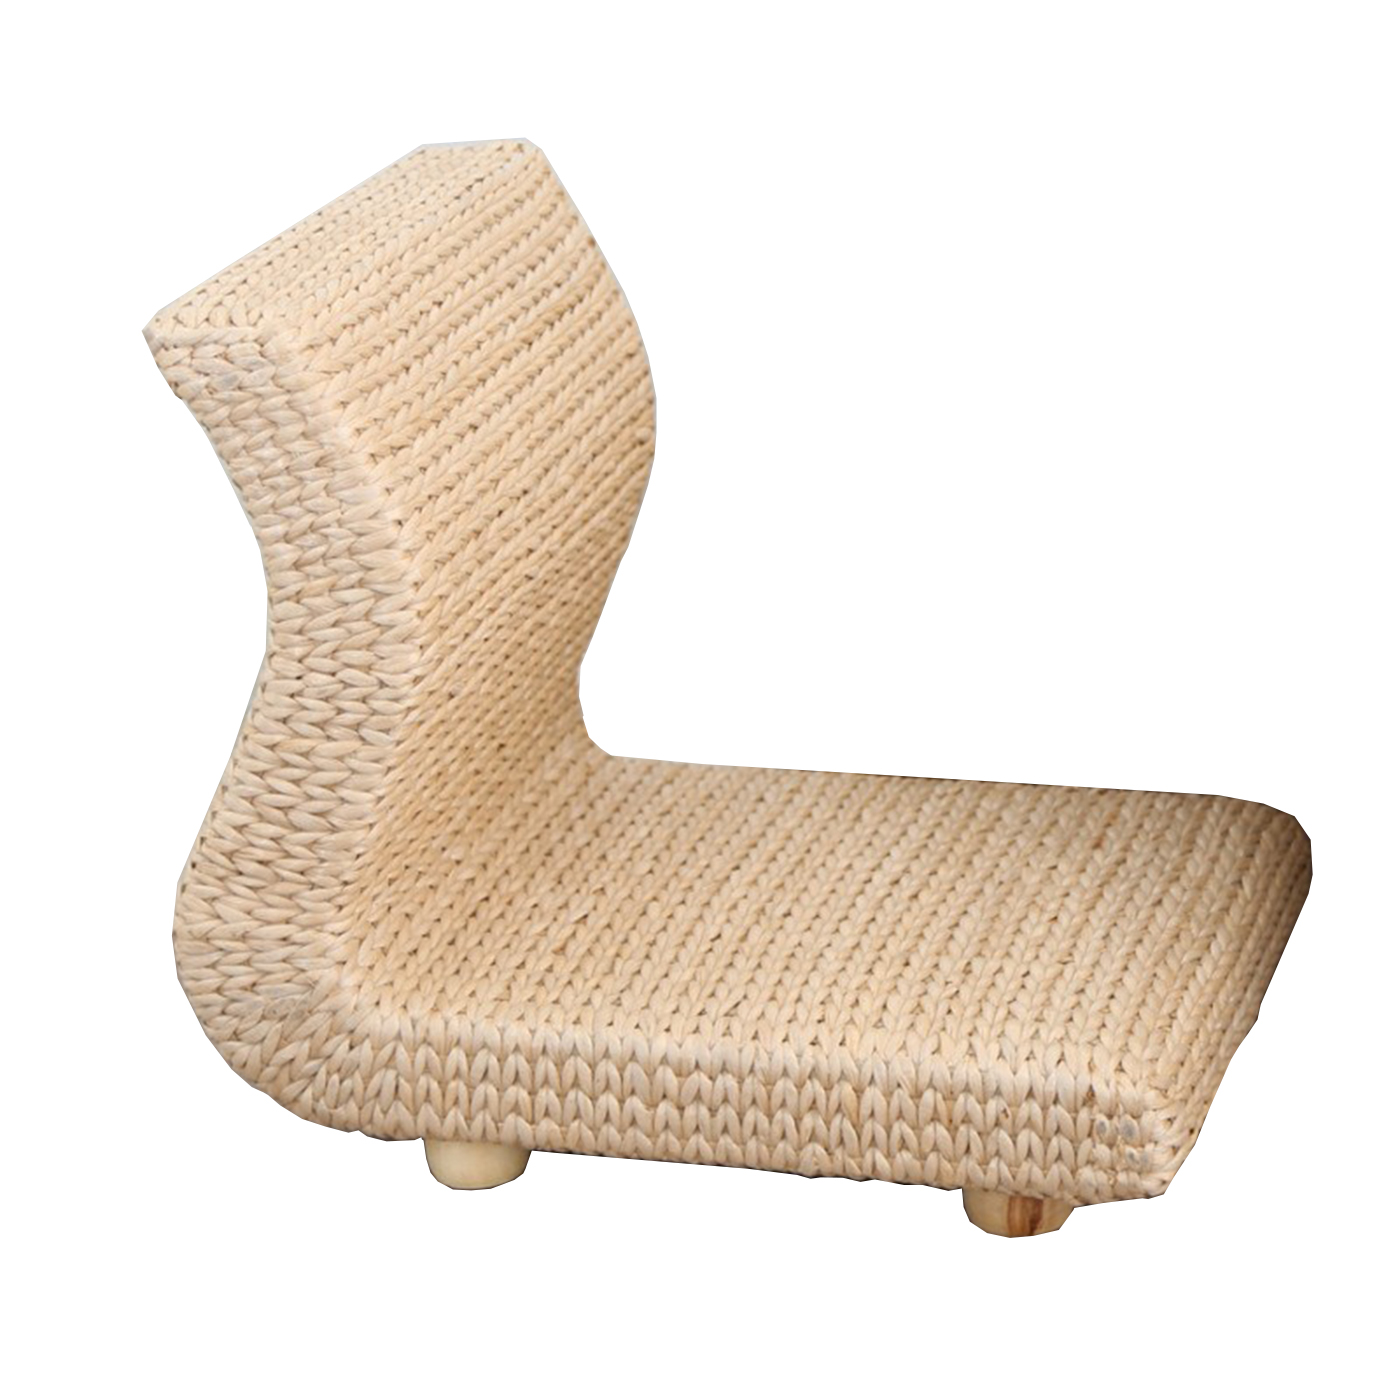 Pushgrass woven chair